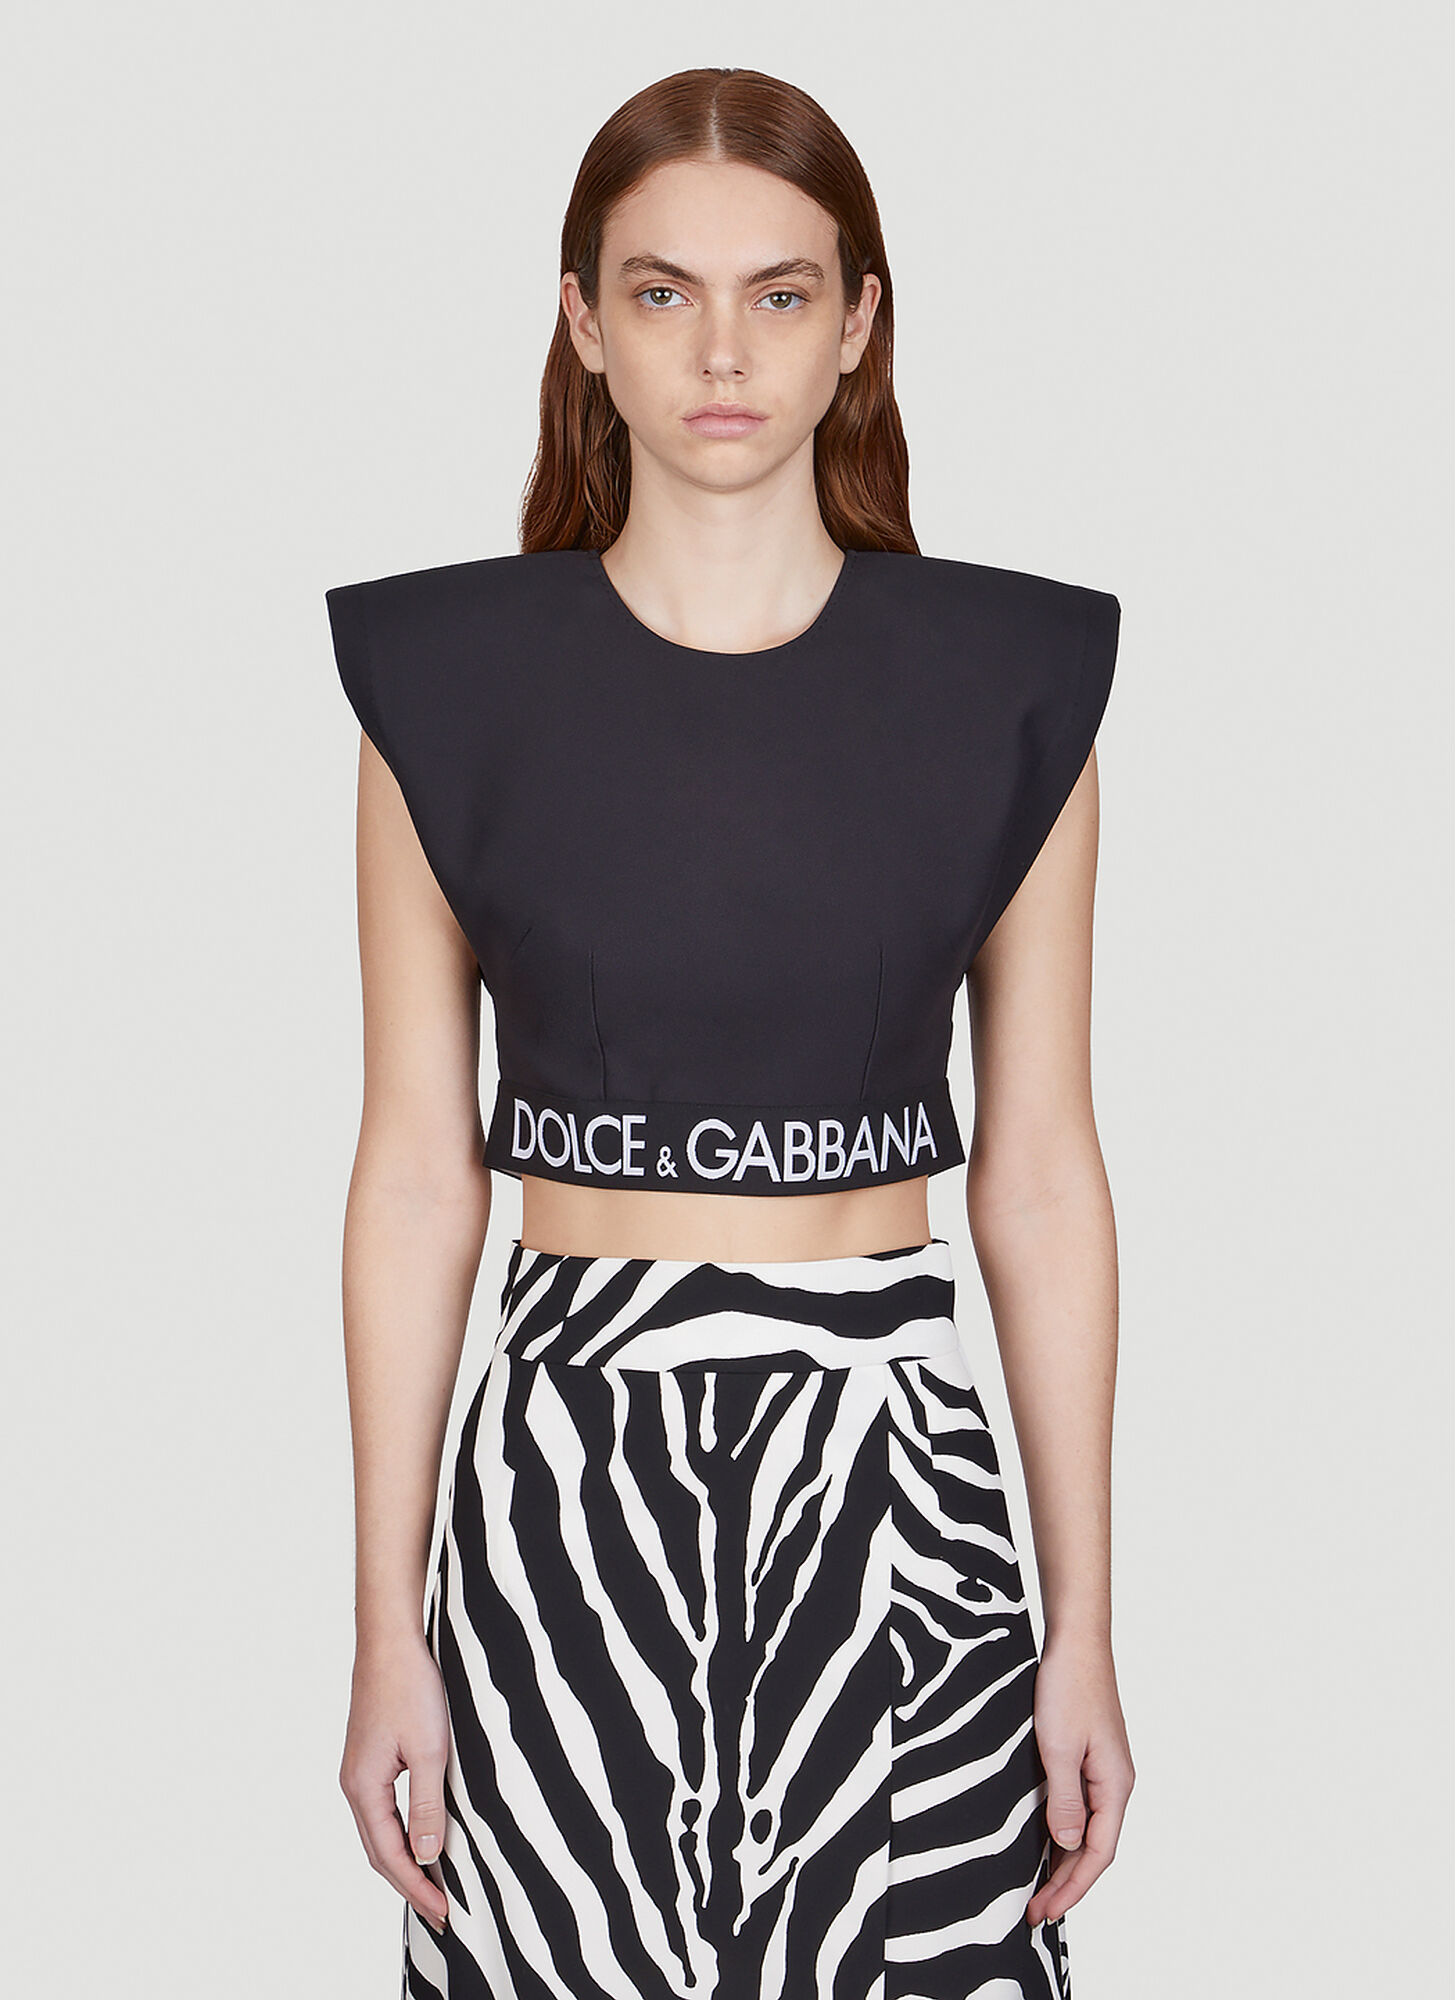 Dolce & Gabbana Extreme Shoulder Crop Top